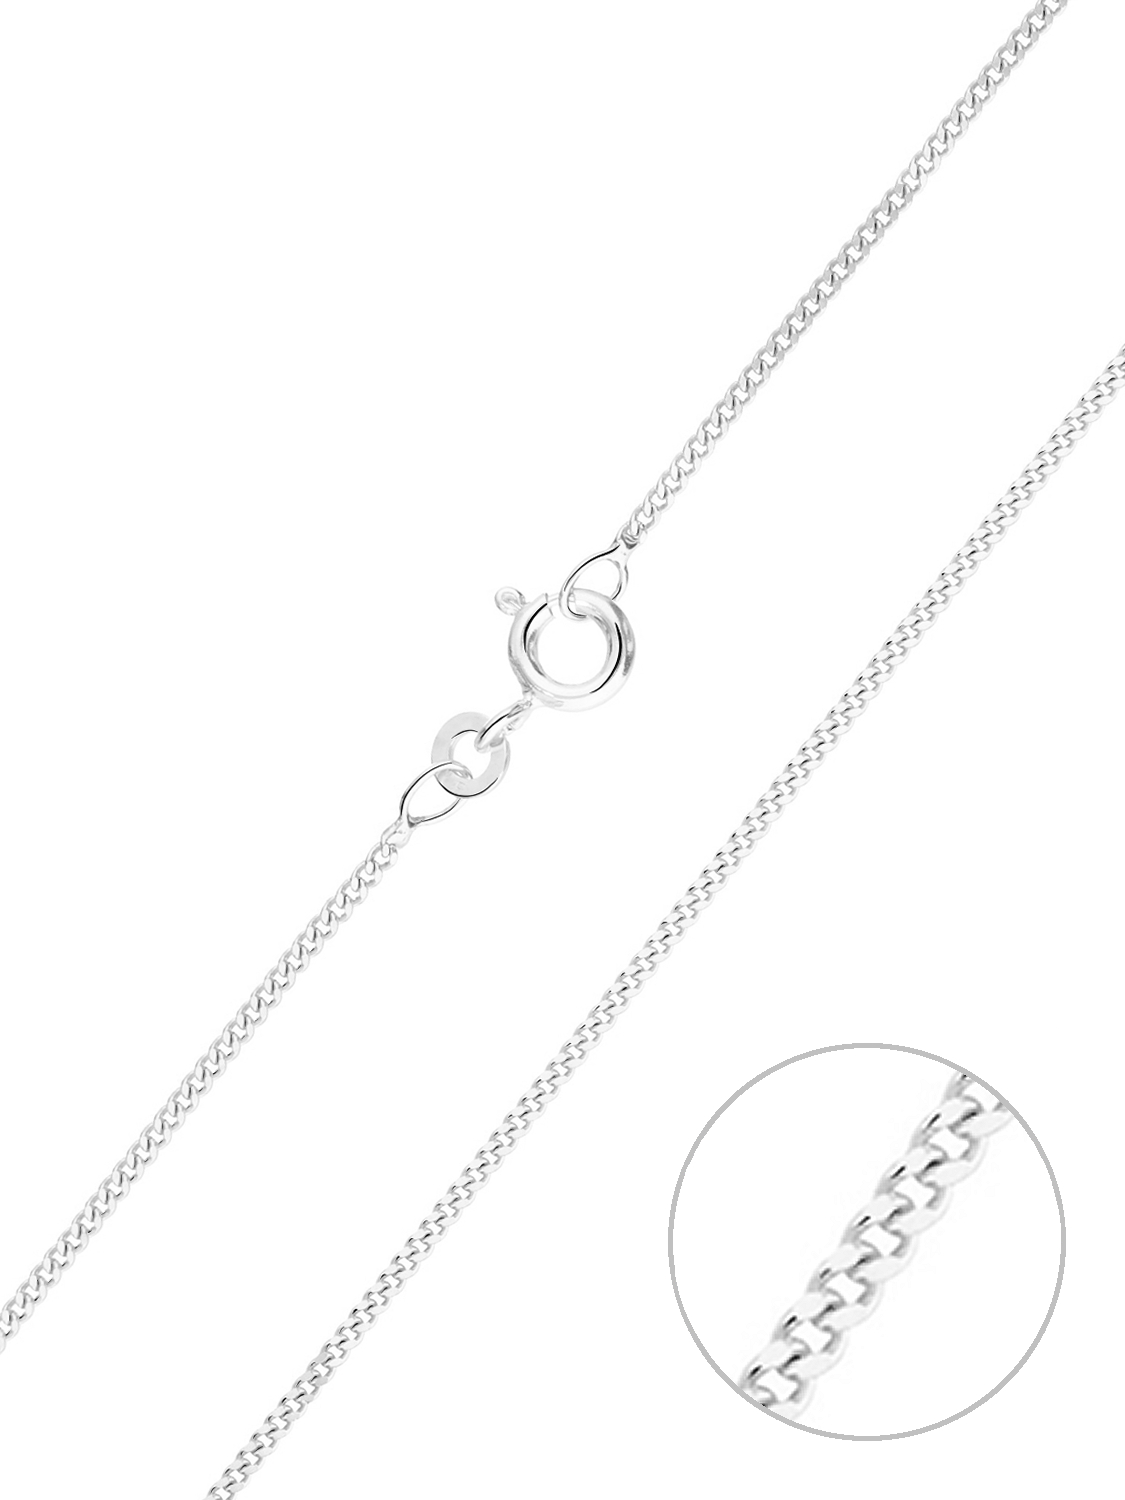 Coed - Silberkette Federring - Breite 1,4 mm - Länge 36 cm